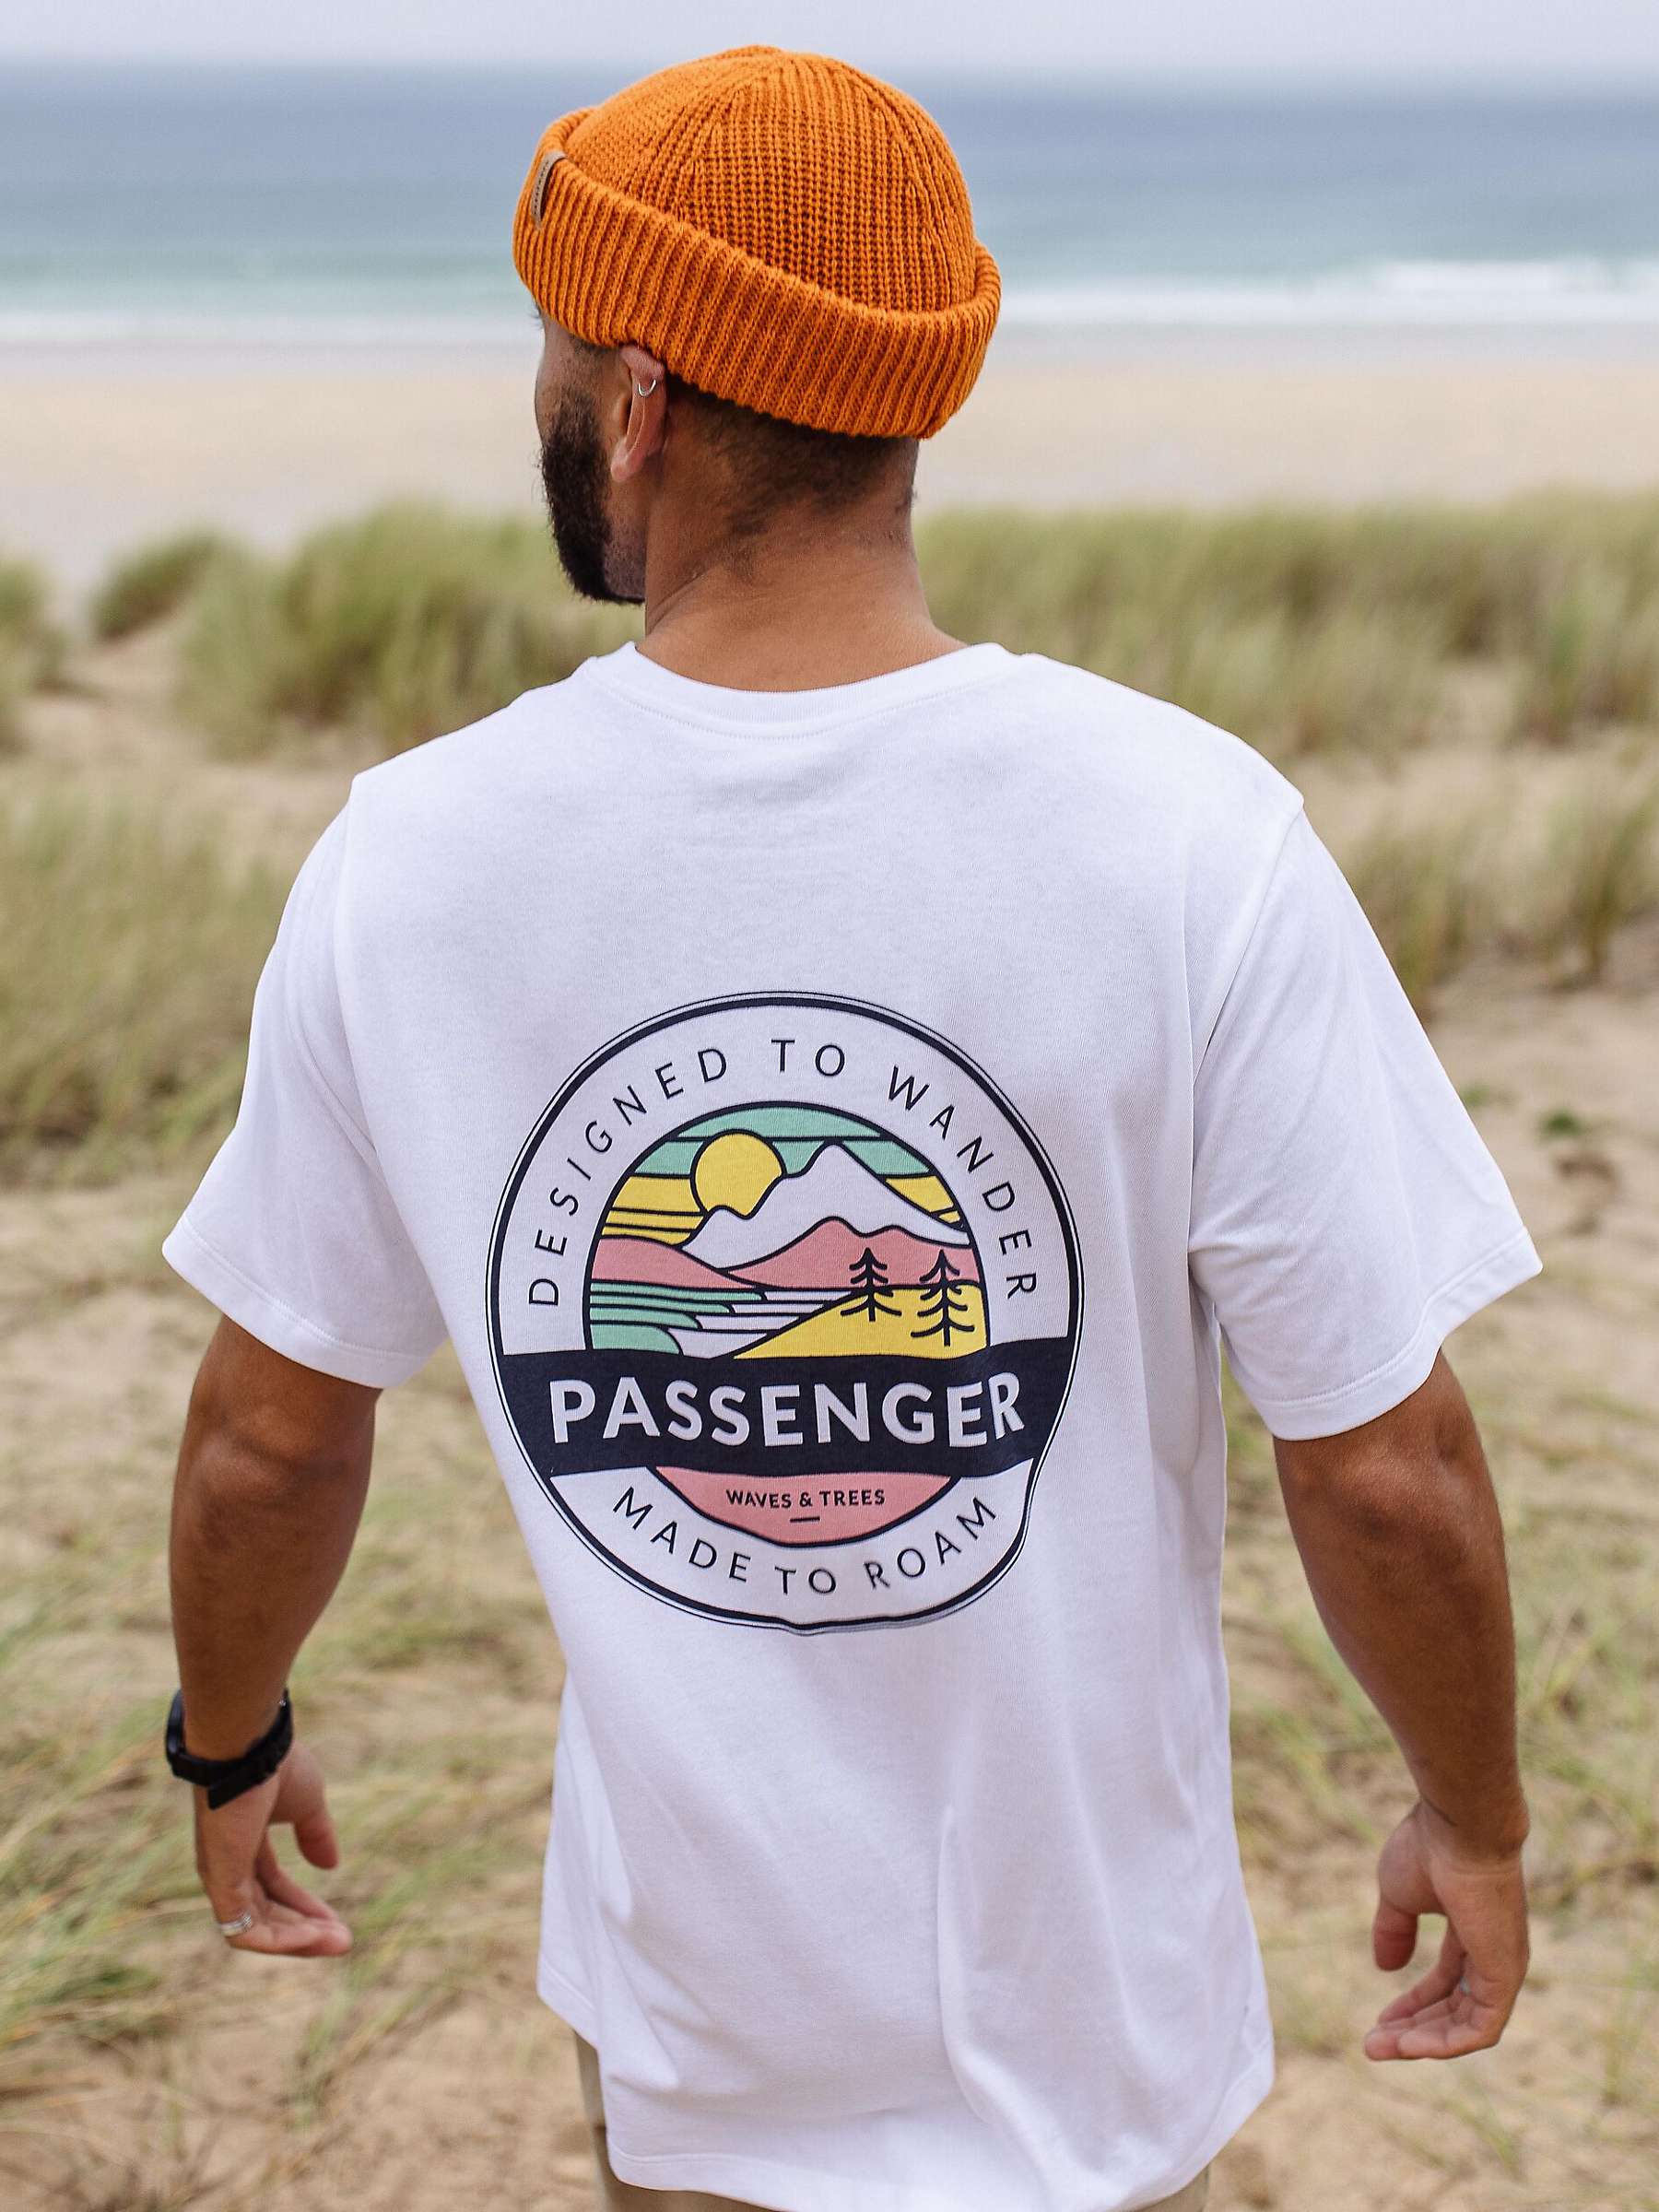 Buy Passenger Odyssey T-Shirt, White Online at johnlewis.com